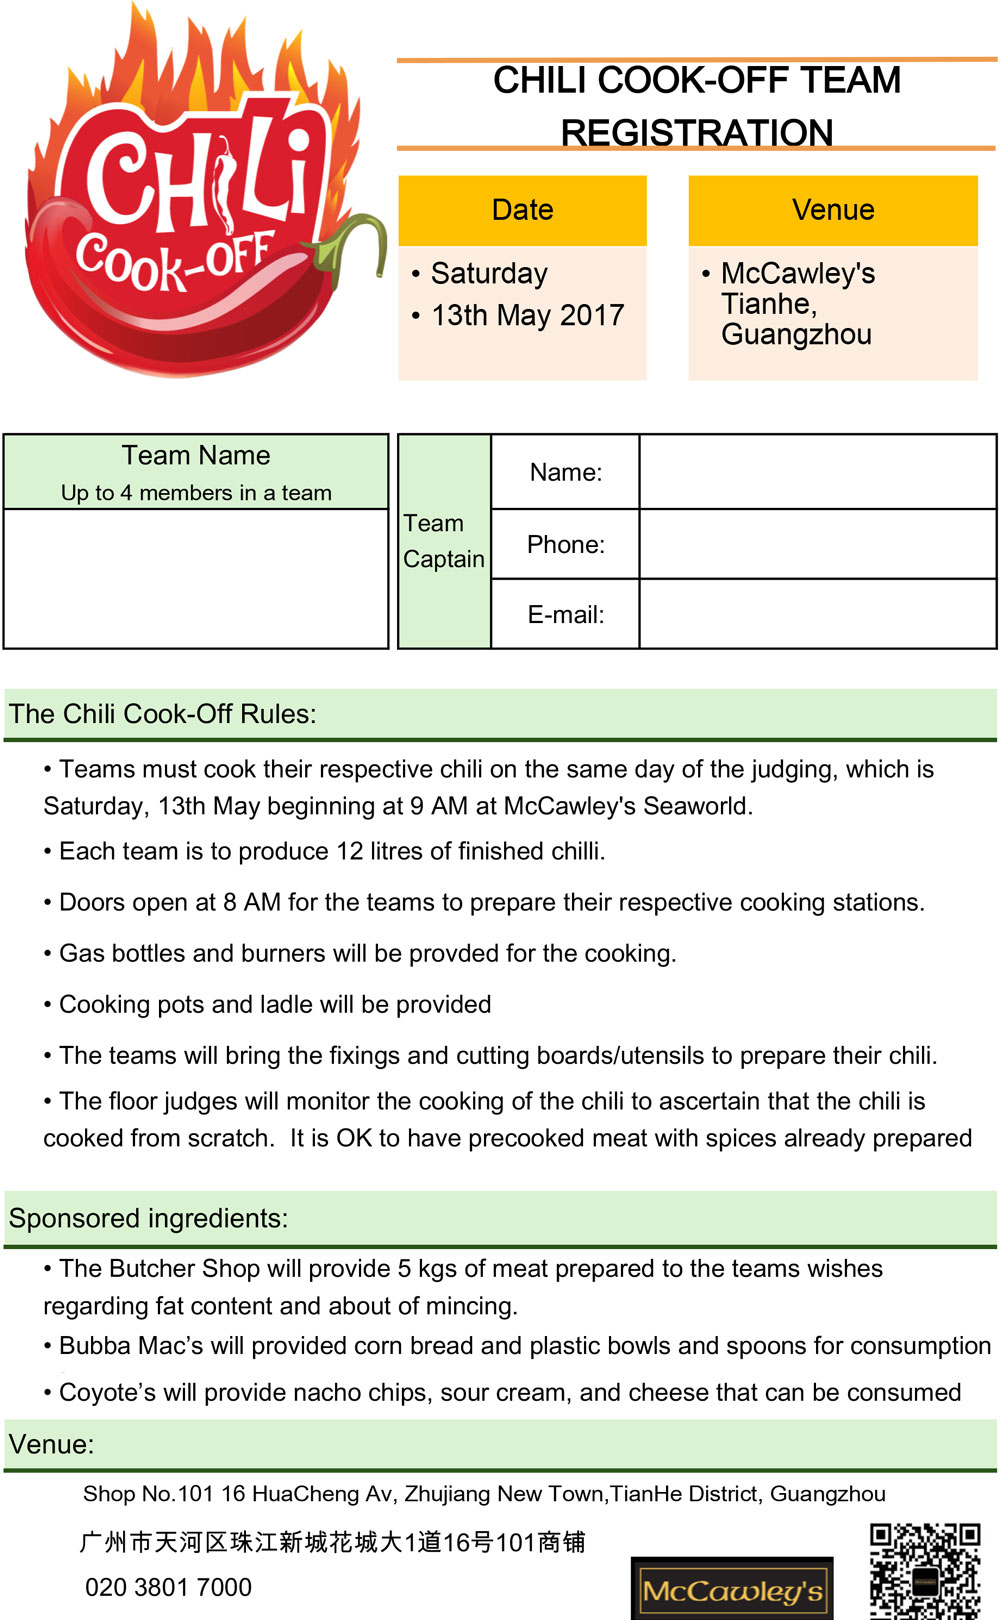 GZ-Chili-Cook-off-team-registration-2017-1.jpg